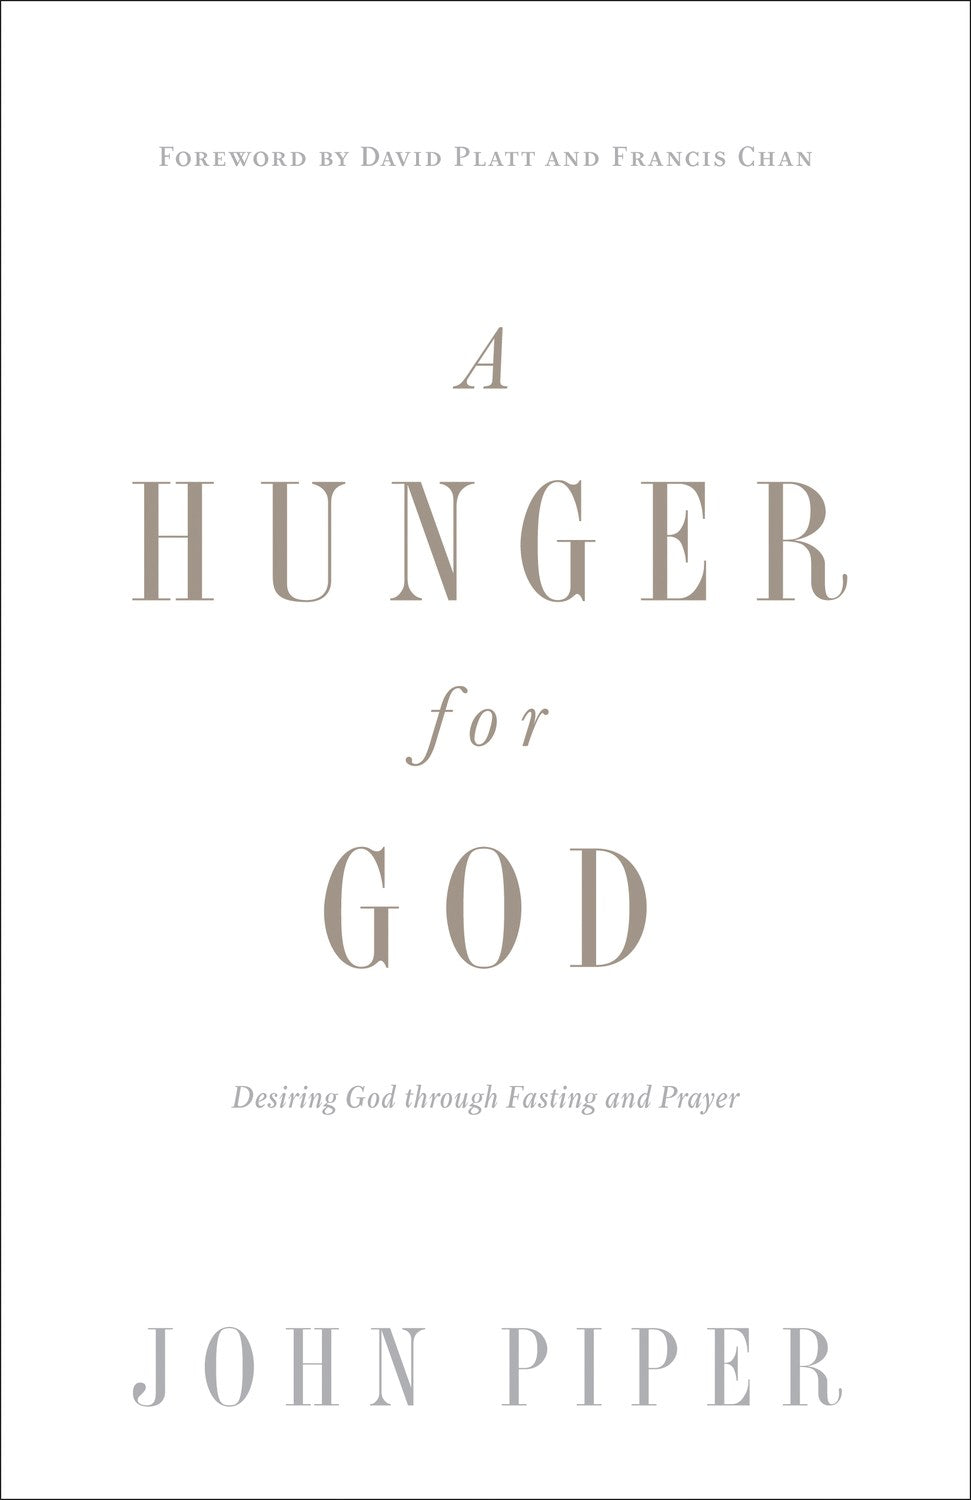 A Hunger For God (Repack)